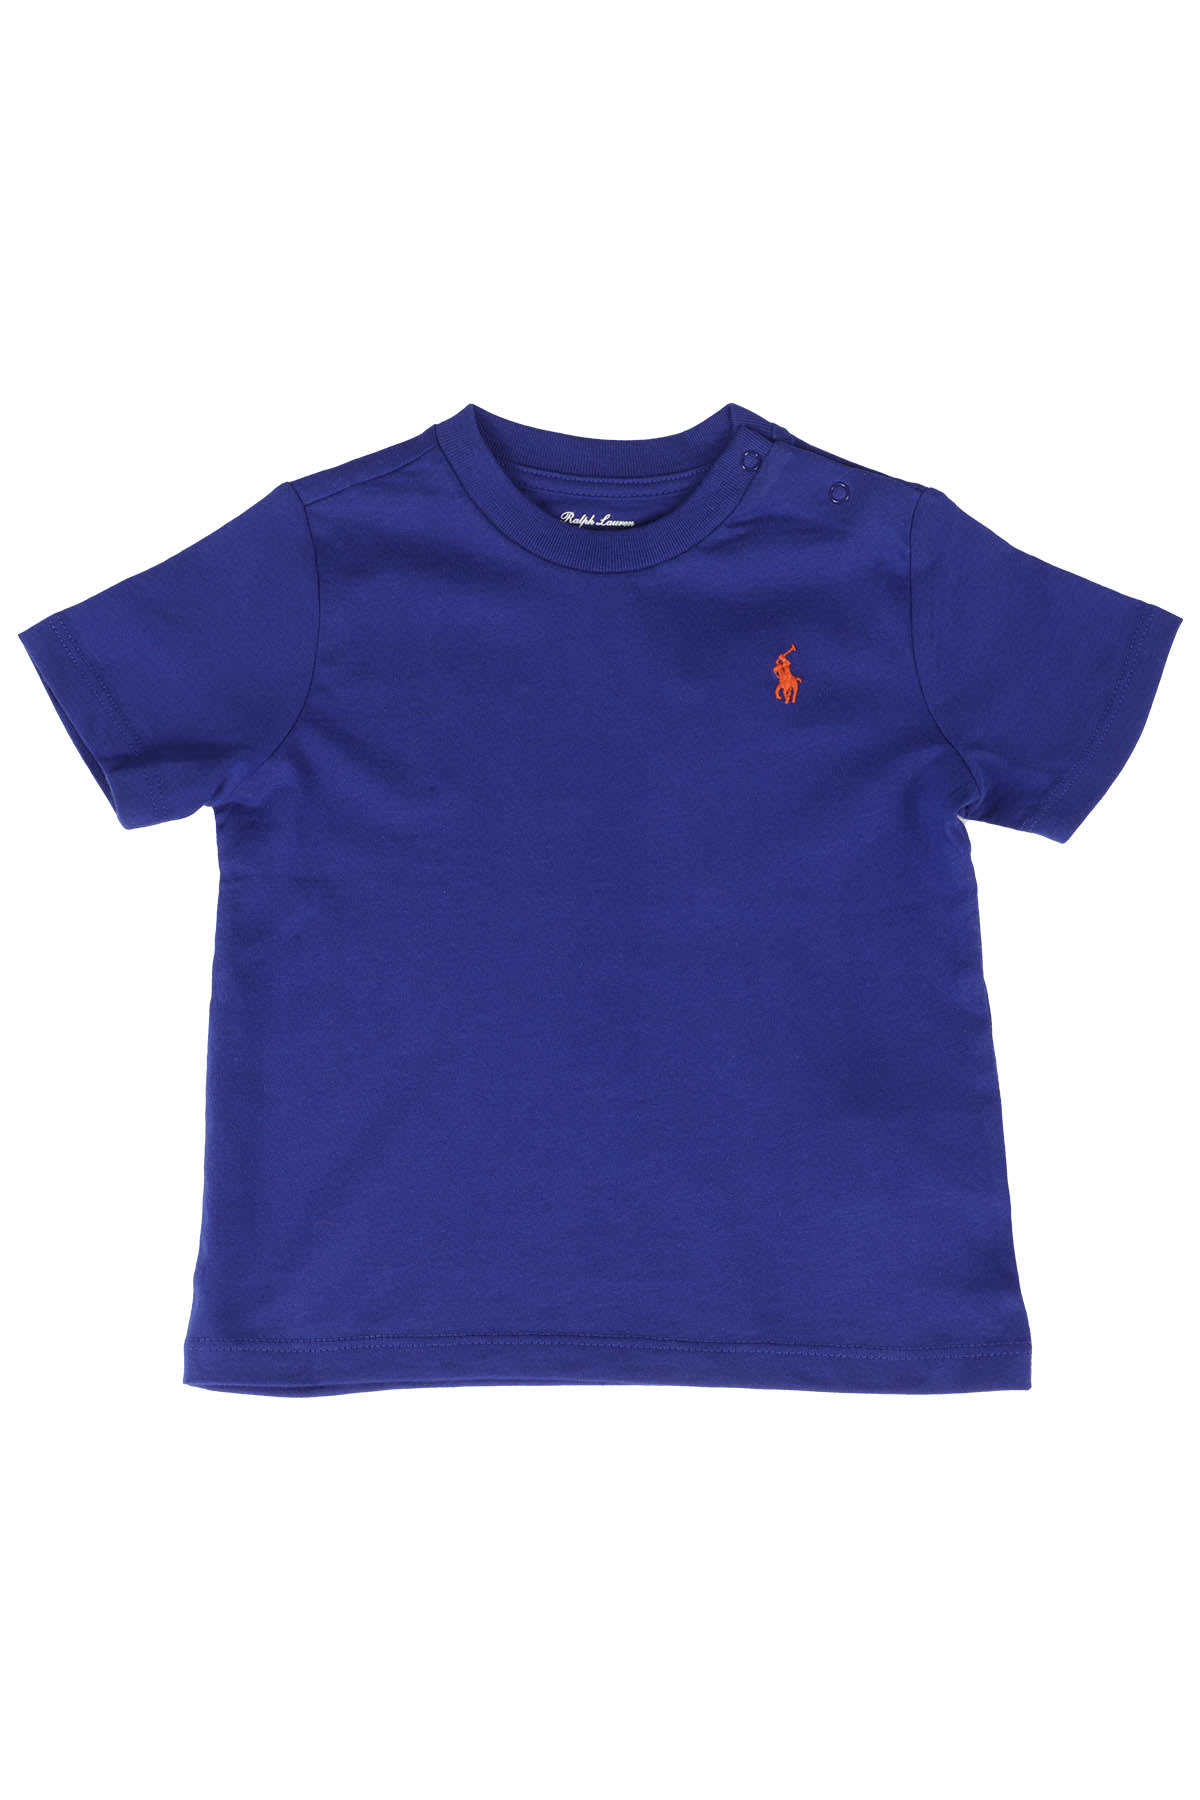 Polo Ralph Lauren Babies'  Cotton Jersey Crewneck Tee Toddler Boy T-shirt Bright Blue Size 5 Cotton